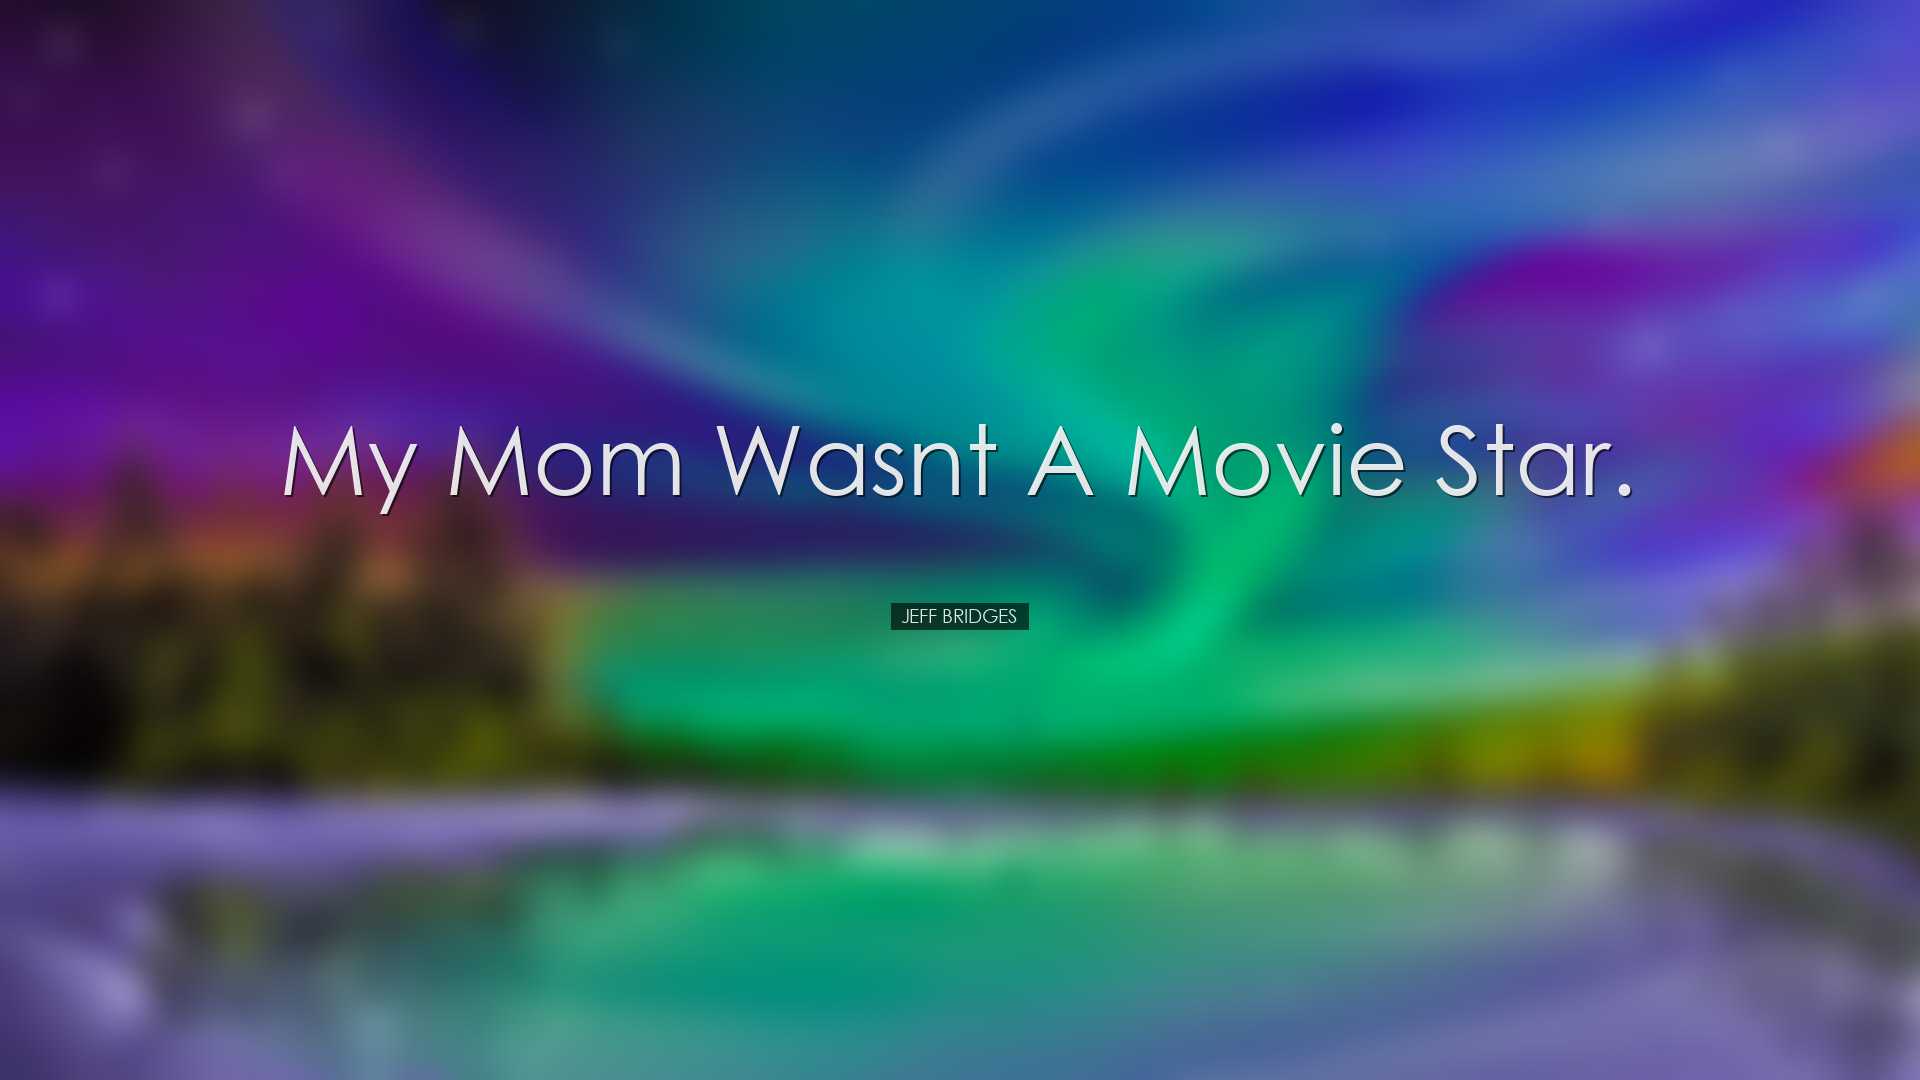 My mom wasnt a movie star. - Jeff Bridges